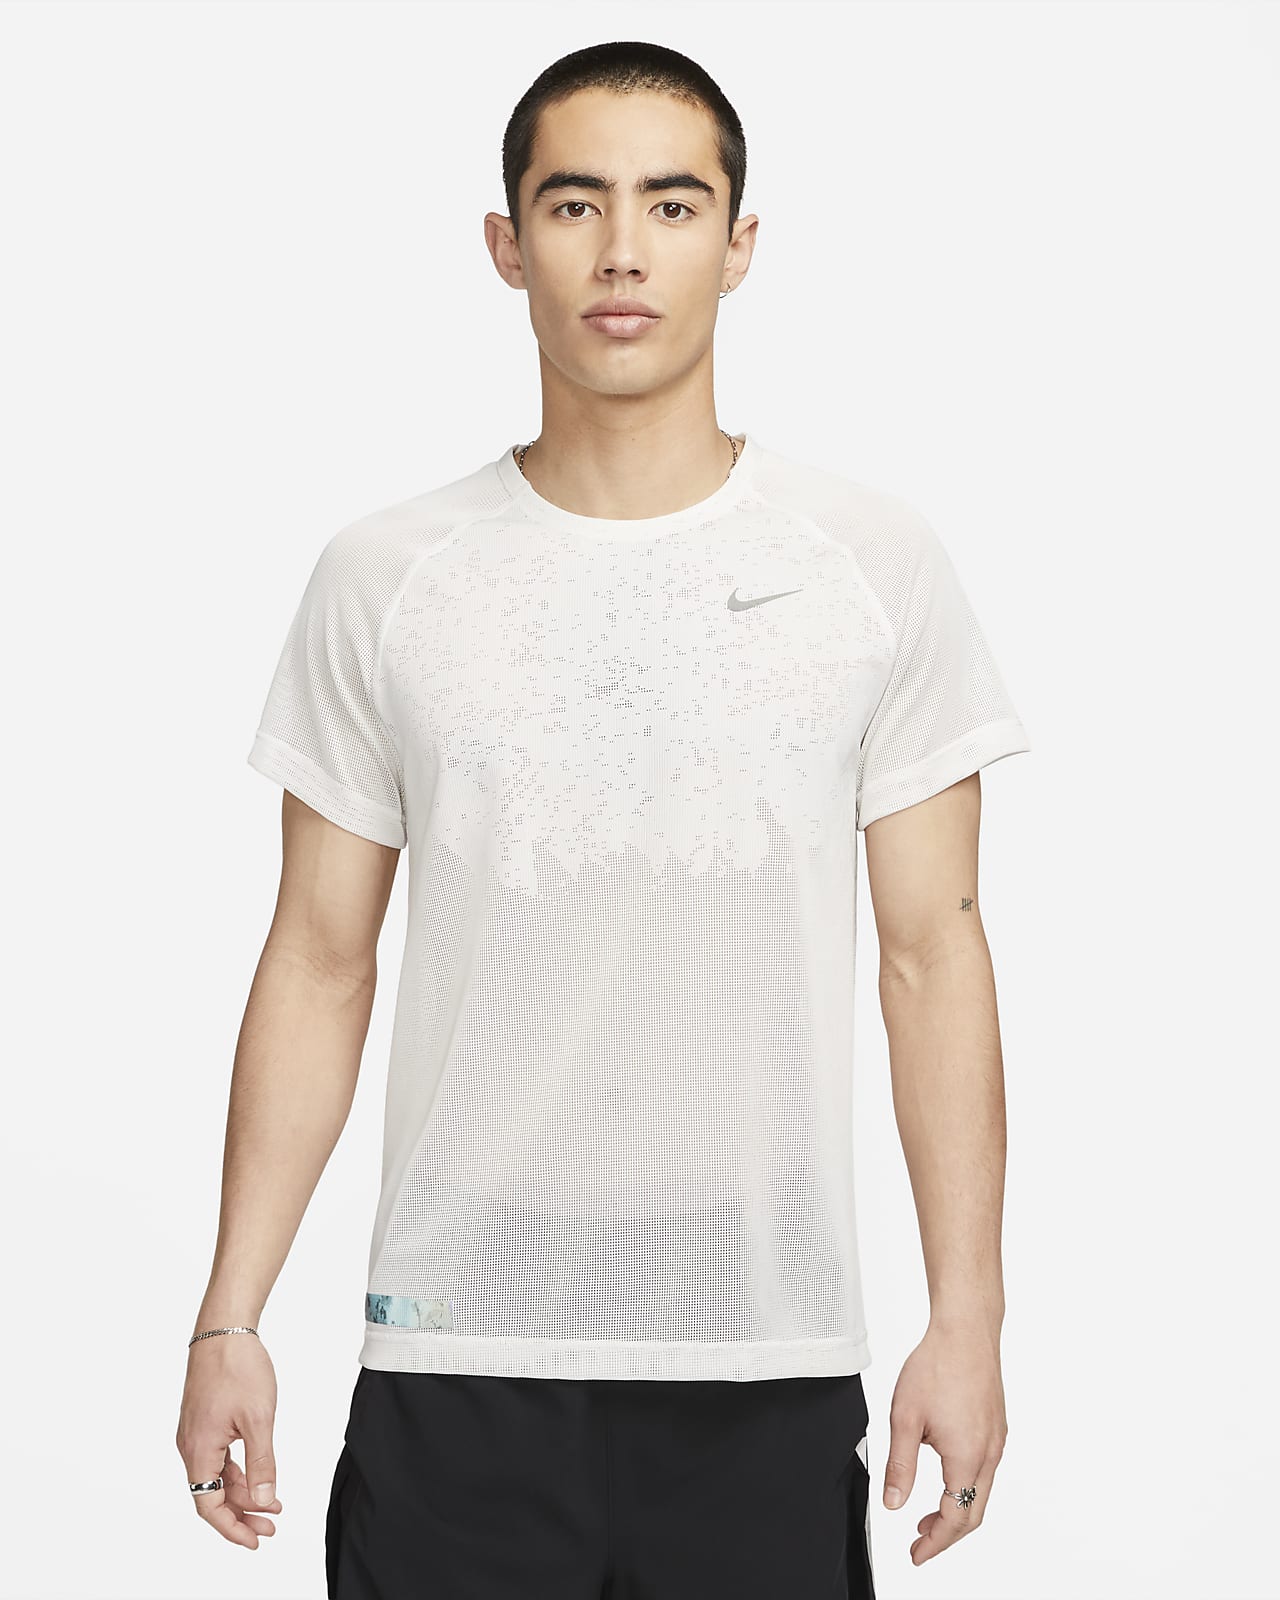 Nike Dri-FIT ADV Run Division TechKnit Men's Short-Sleeve Running Top